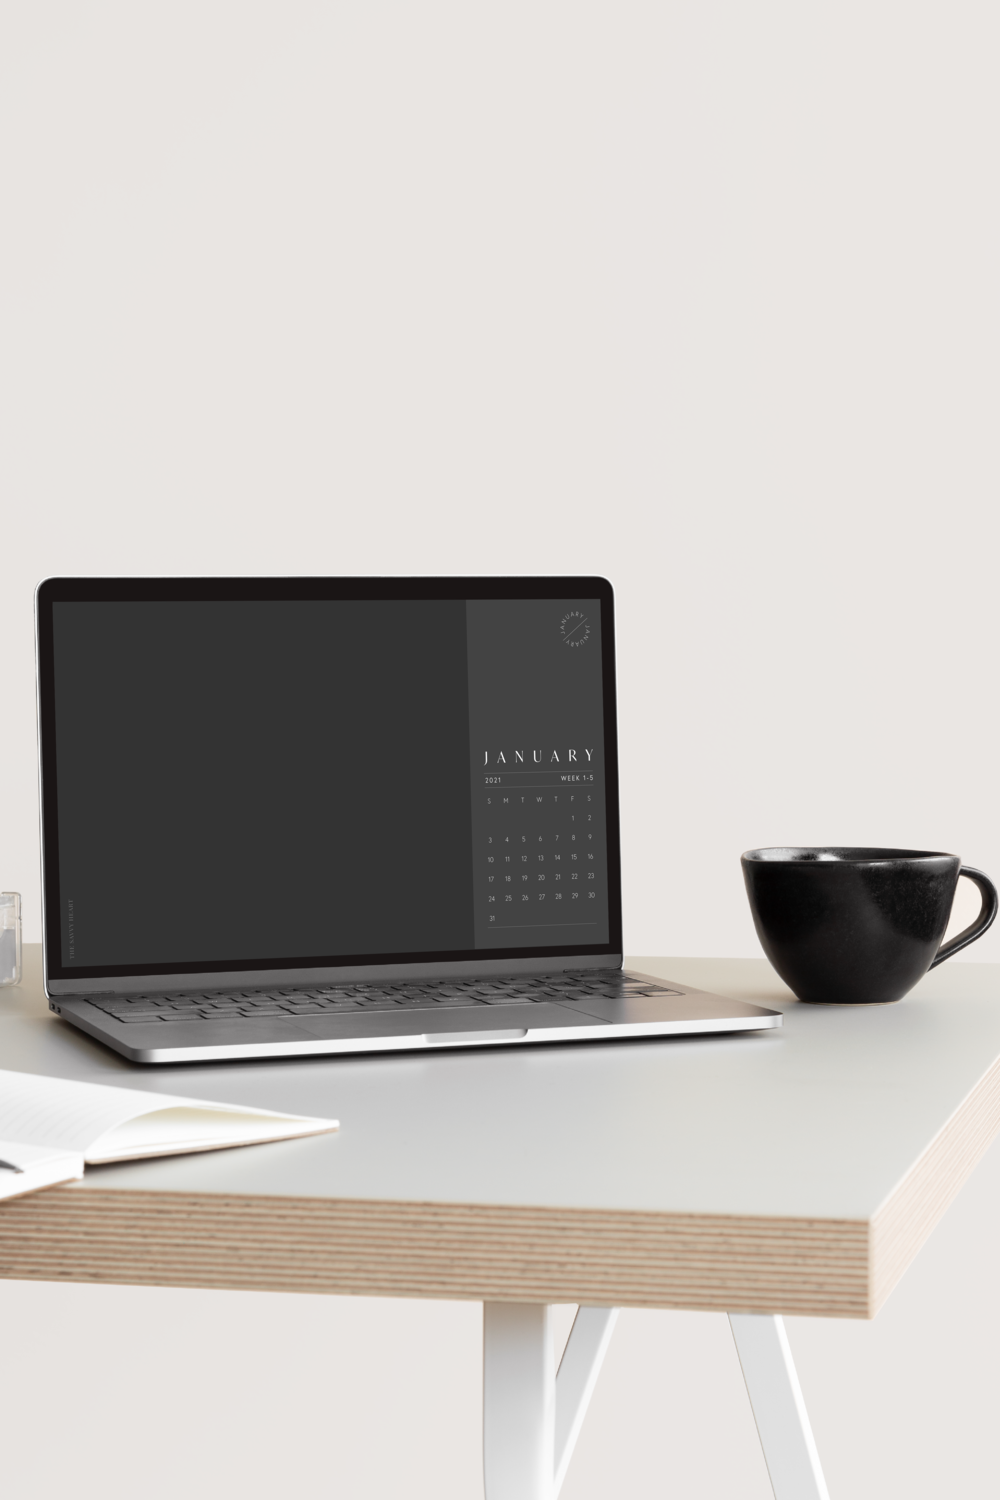 Minimal and modern 2021 Desktop Calendar Wallpaper - Free Download.png